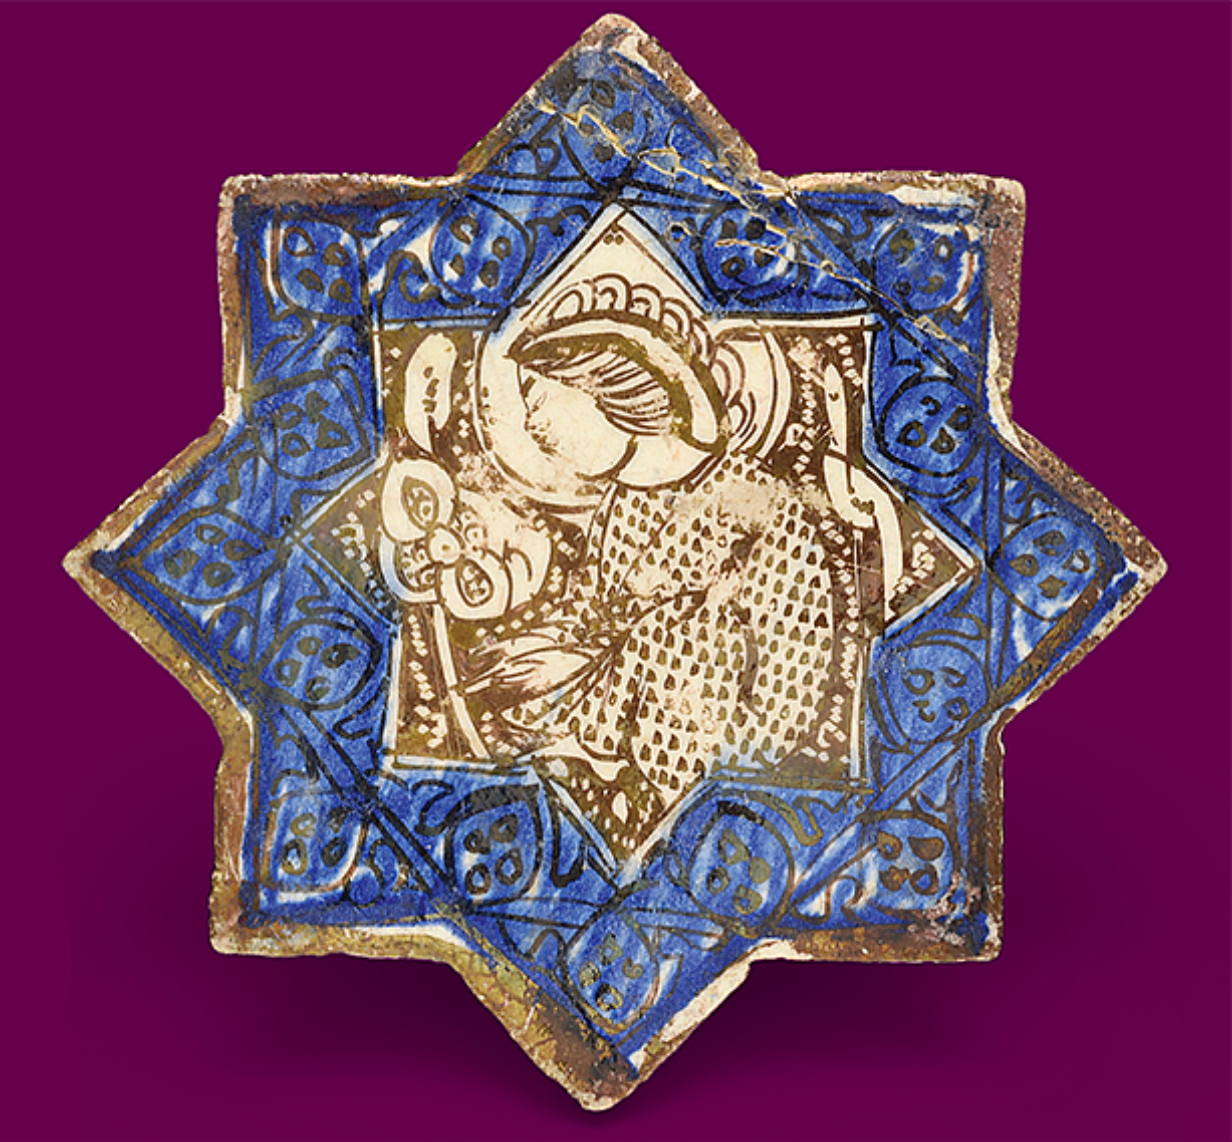 Exhibition art for “Treasured Ornament: 10 Centuries of Islamic Art”